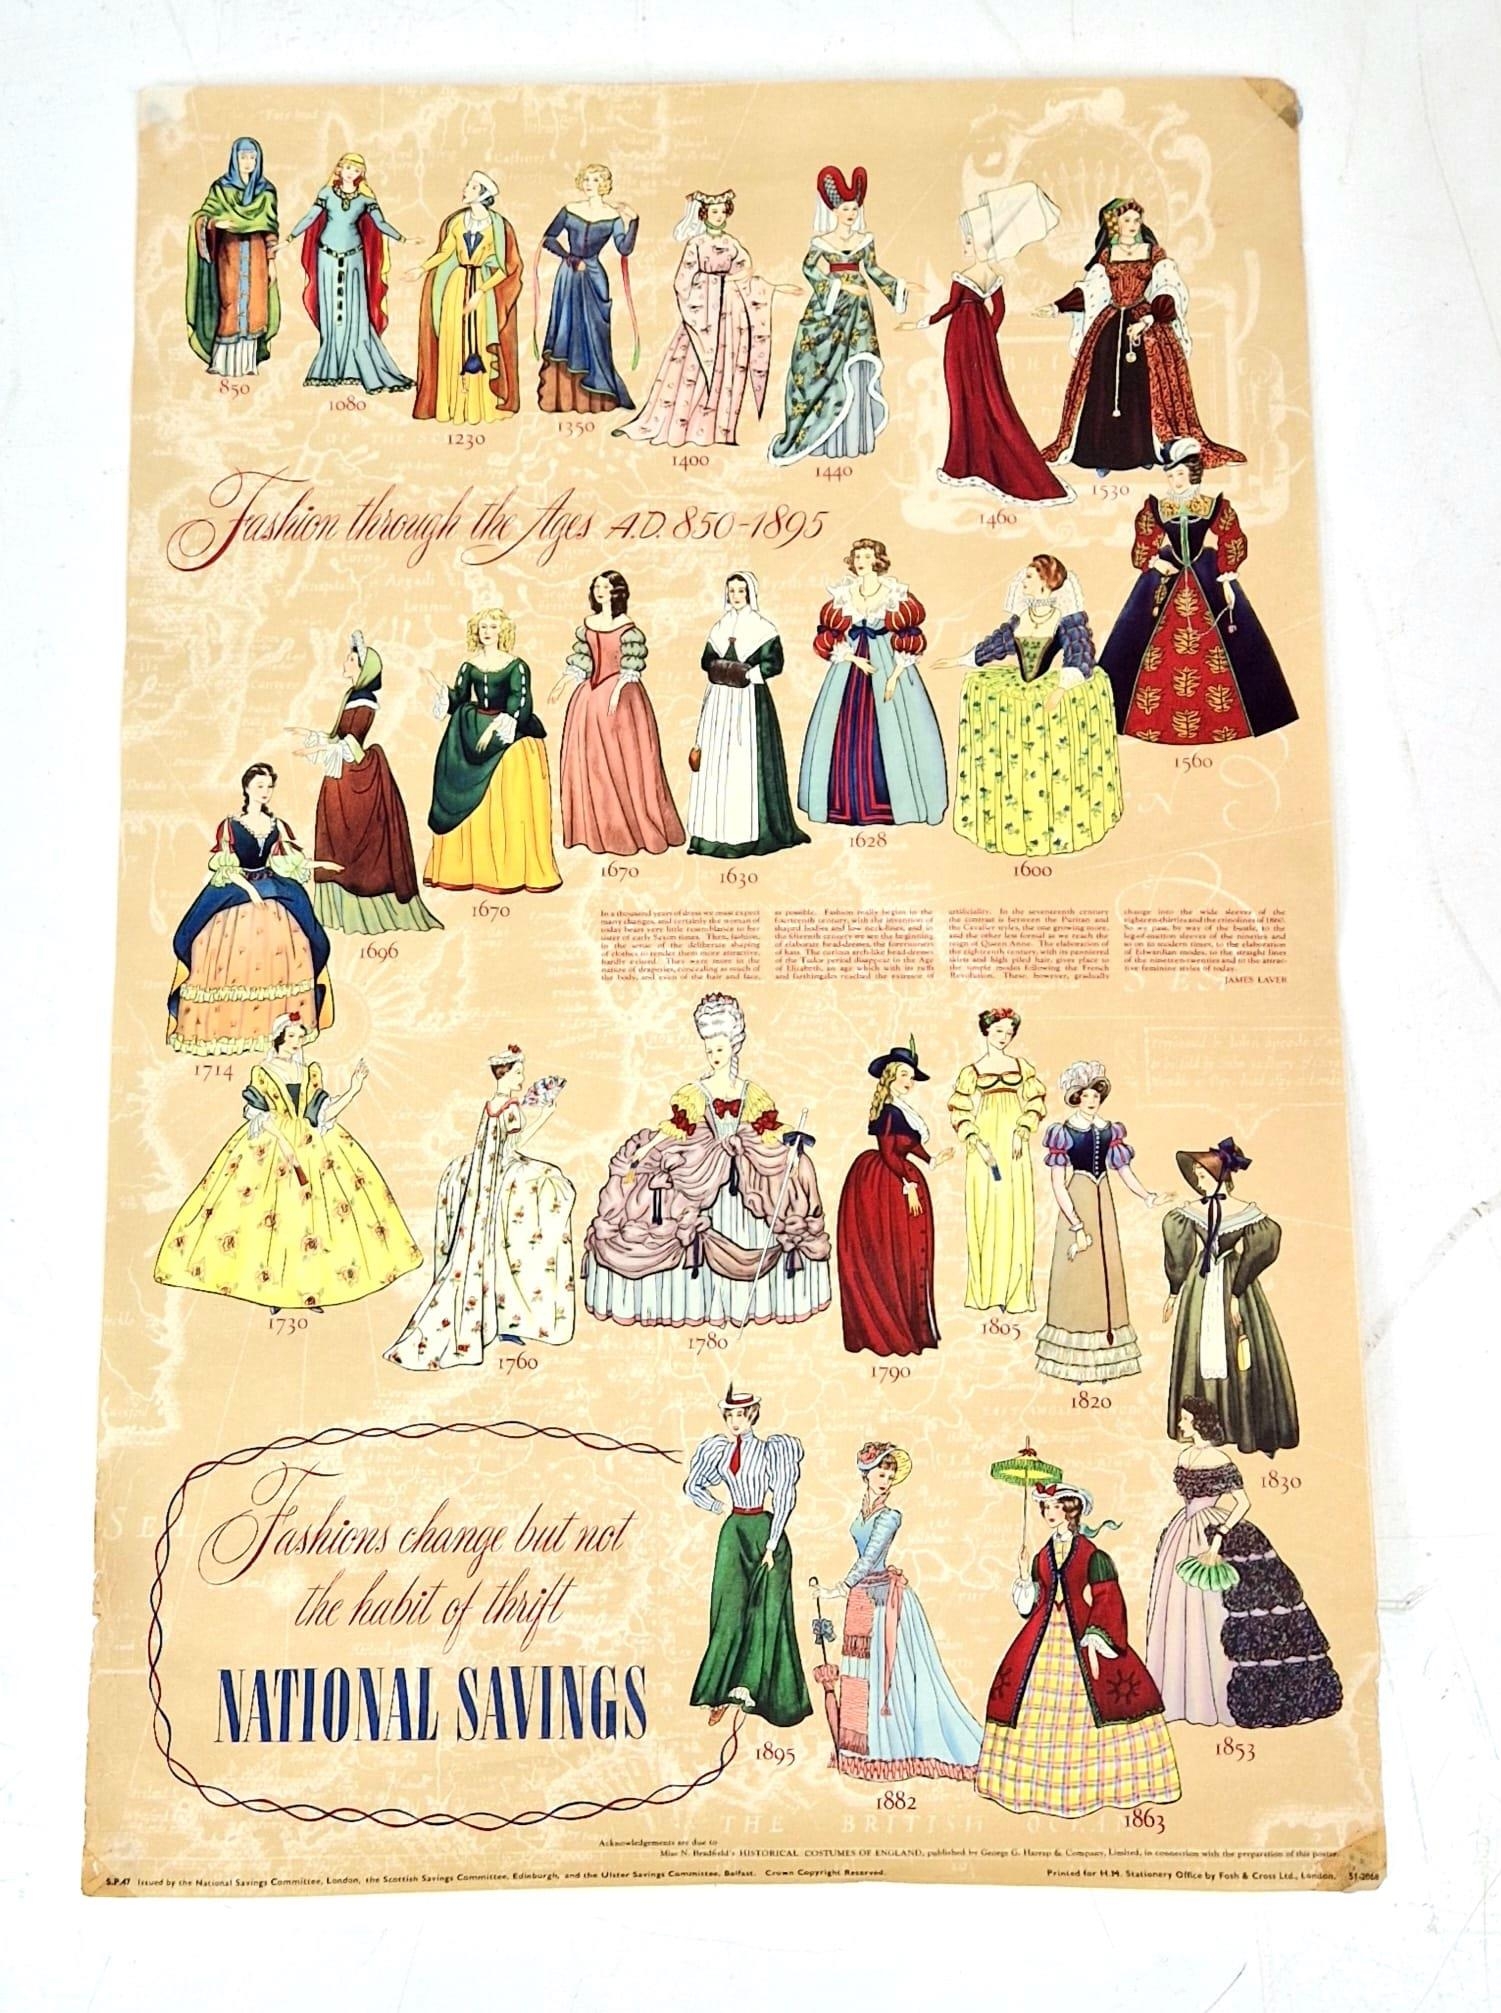 A Vintage Original 1948 National Savings Poster Illustrating Ladies Fashion through the Ages. 75 x